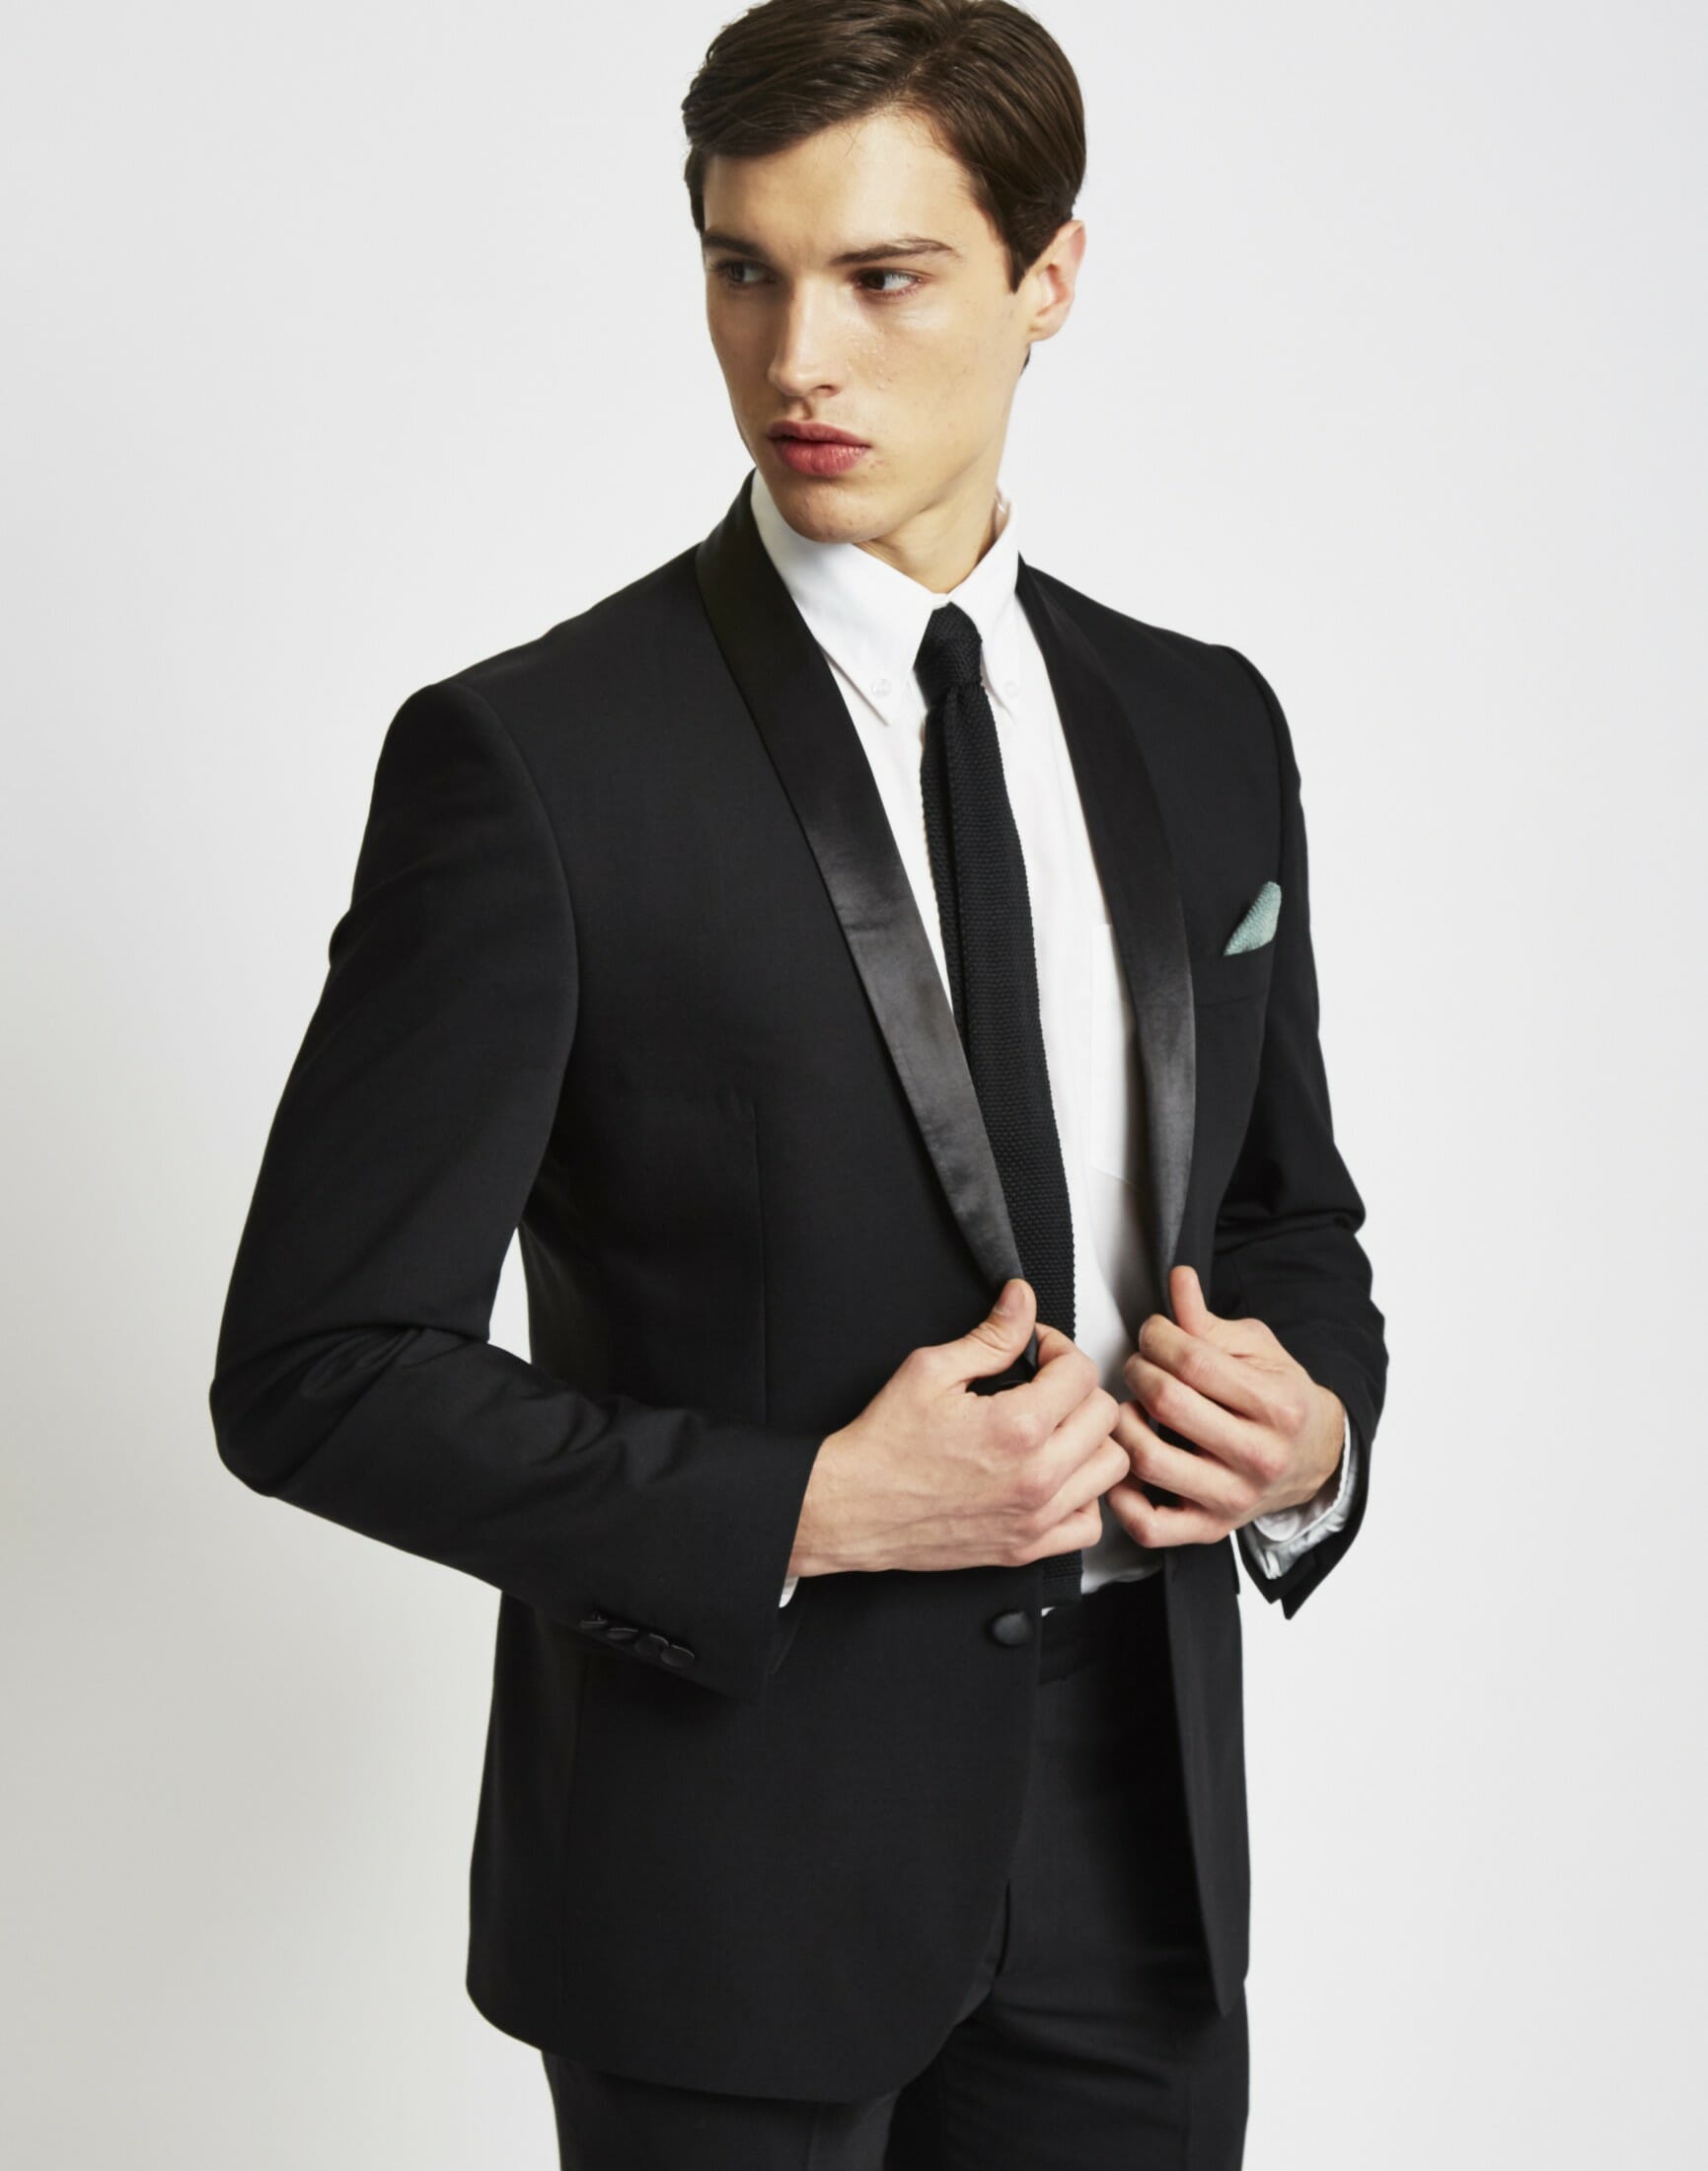 formal black tie optional dress code